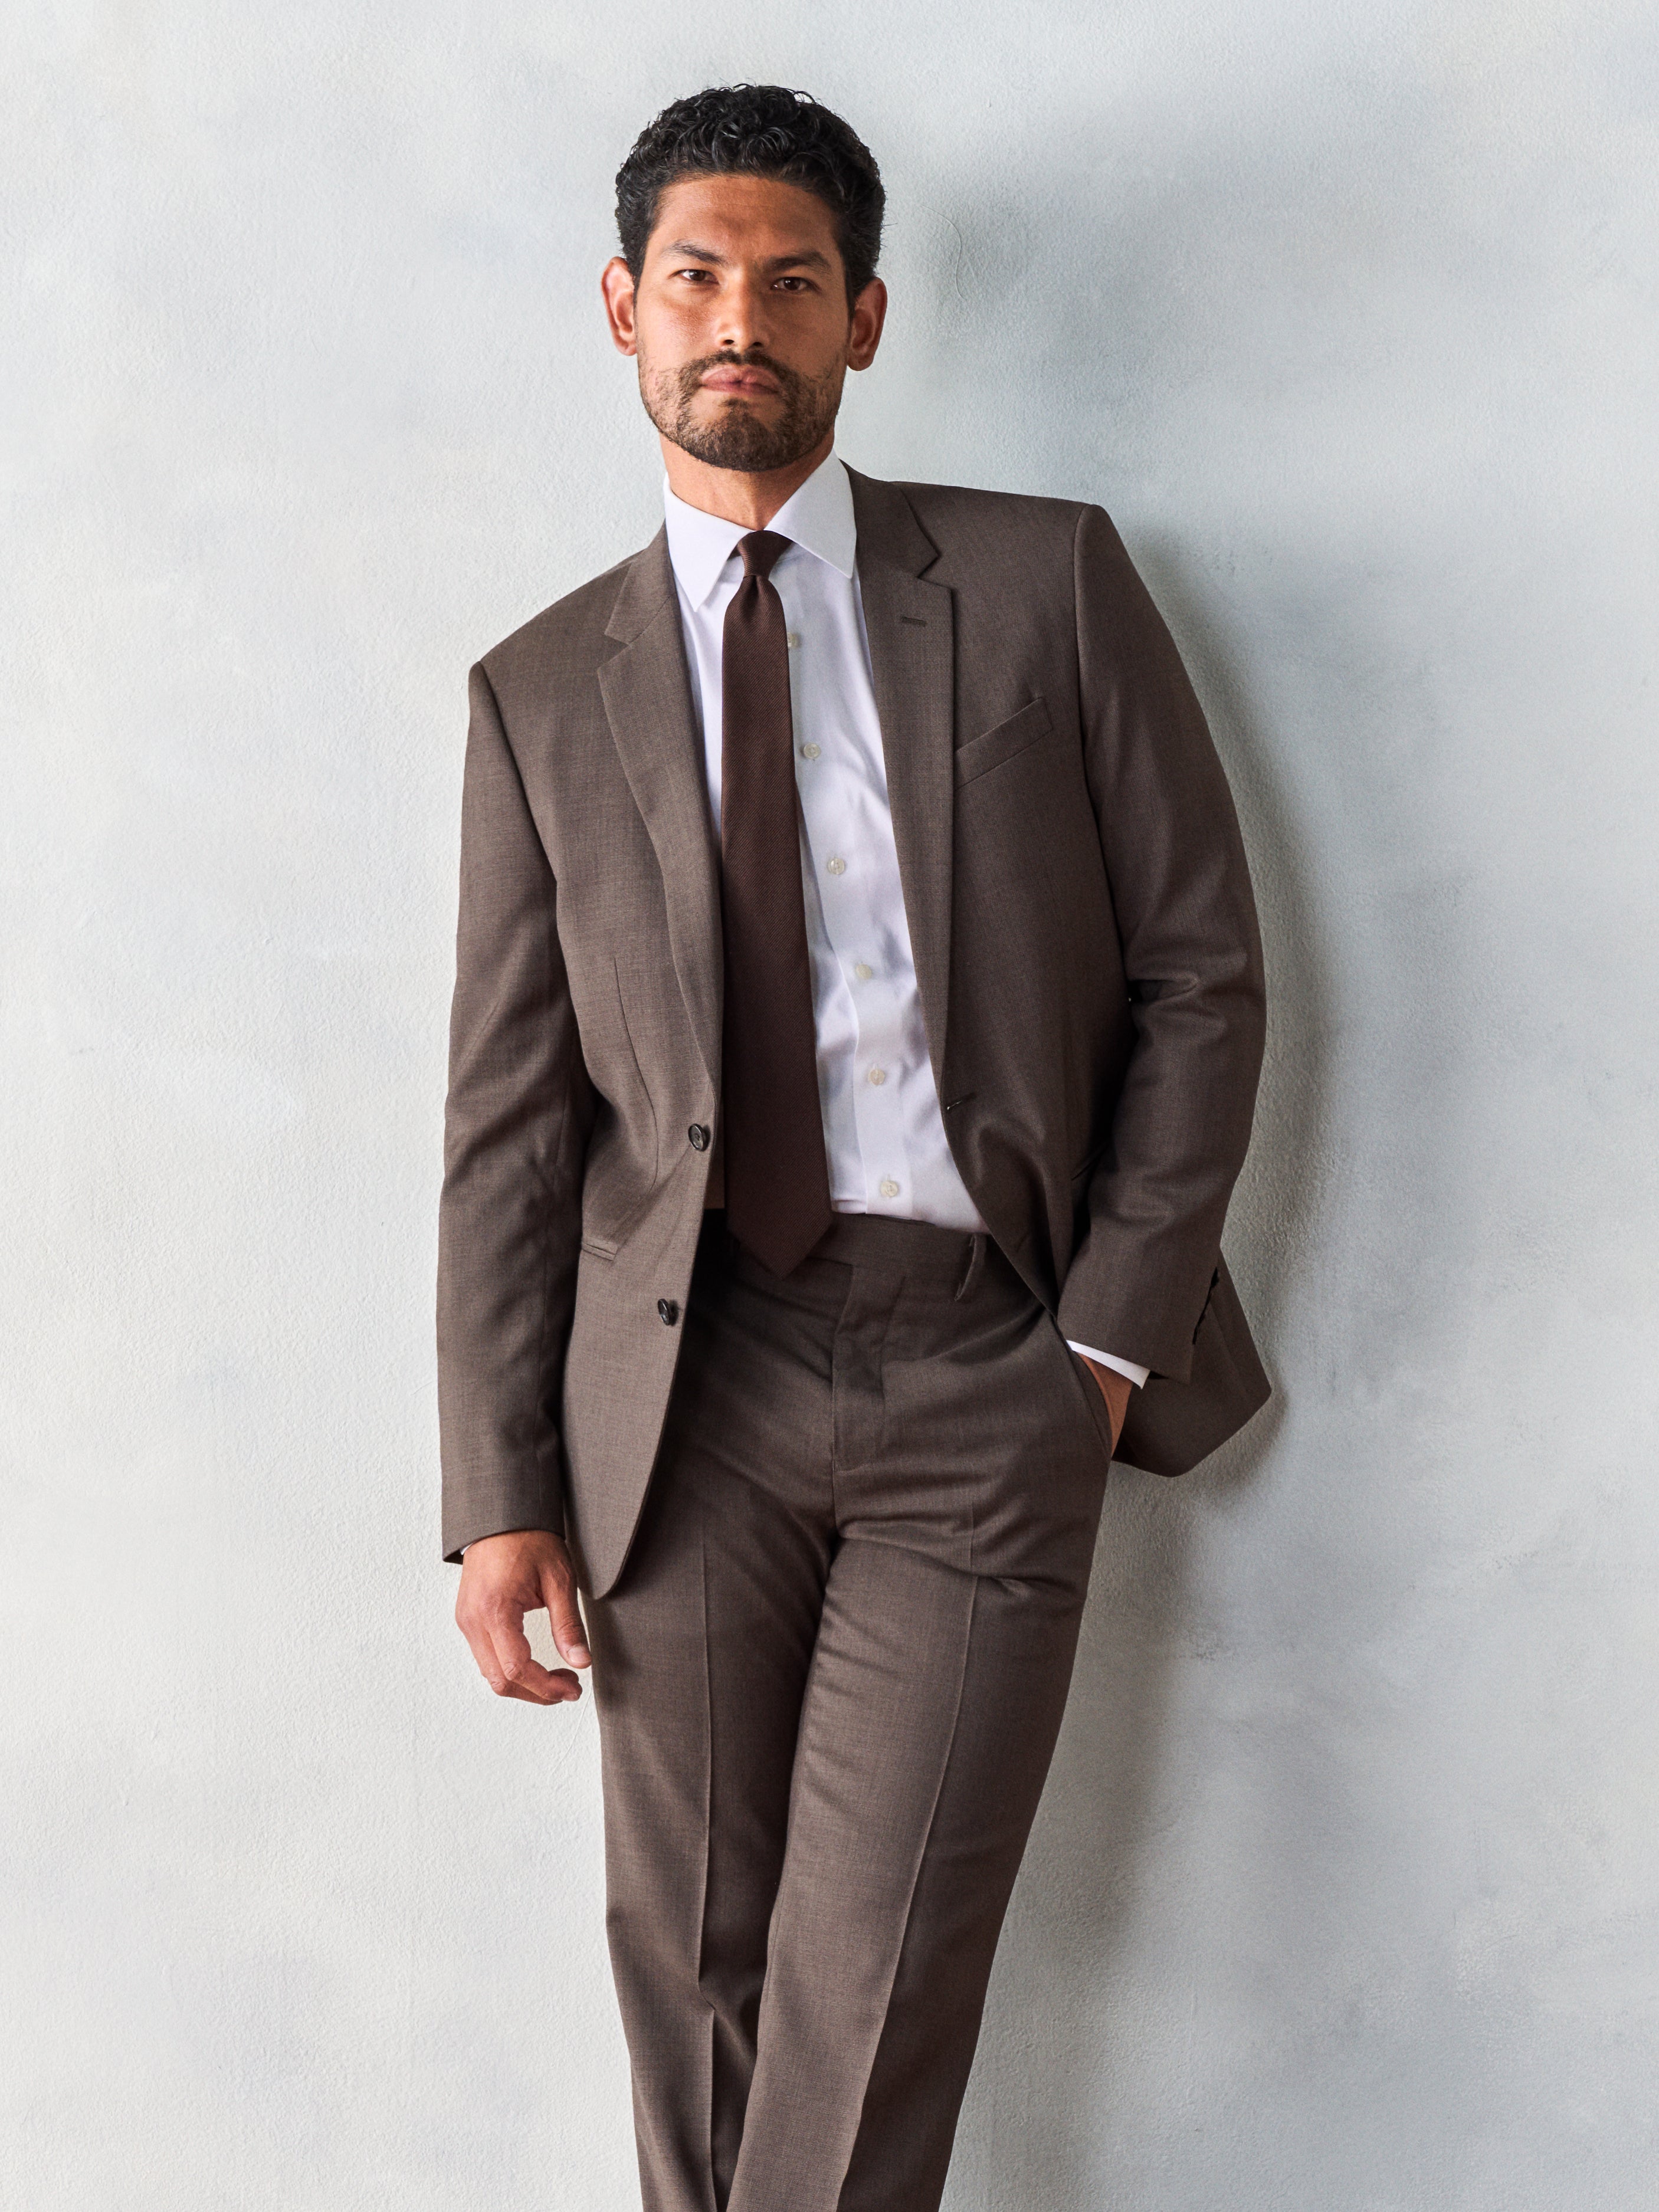 Head-to-toe styling tips for a brown tweed suit - Tweedmaker